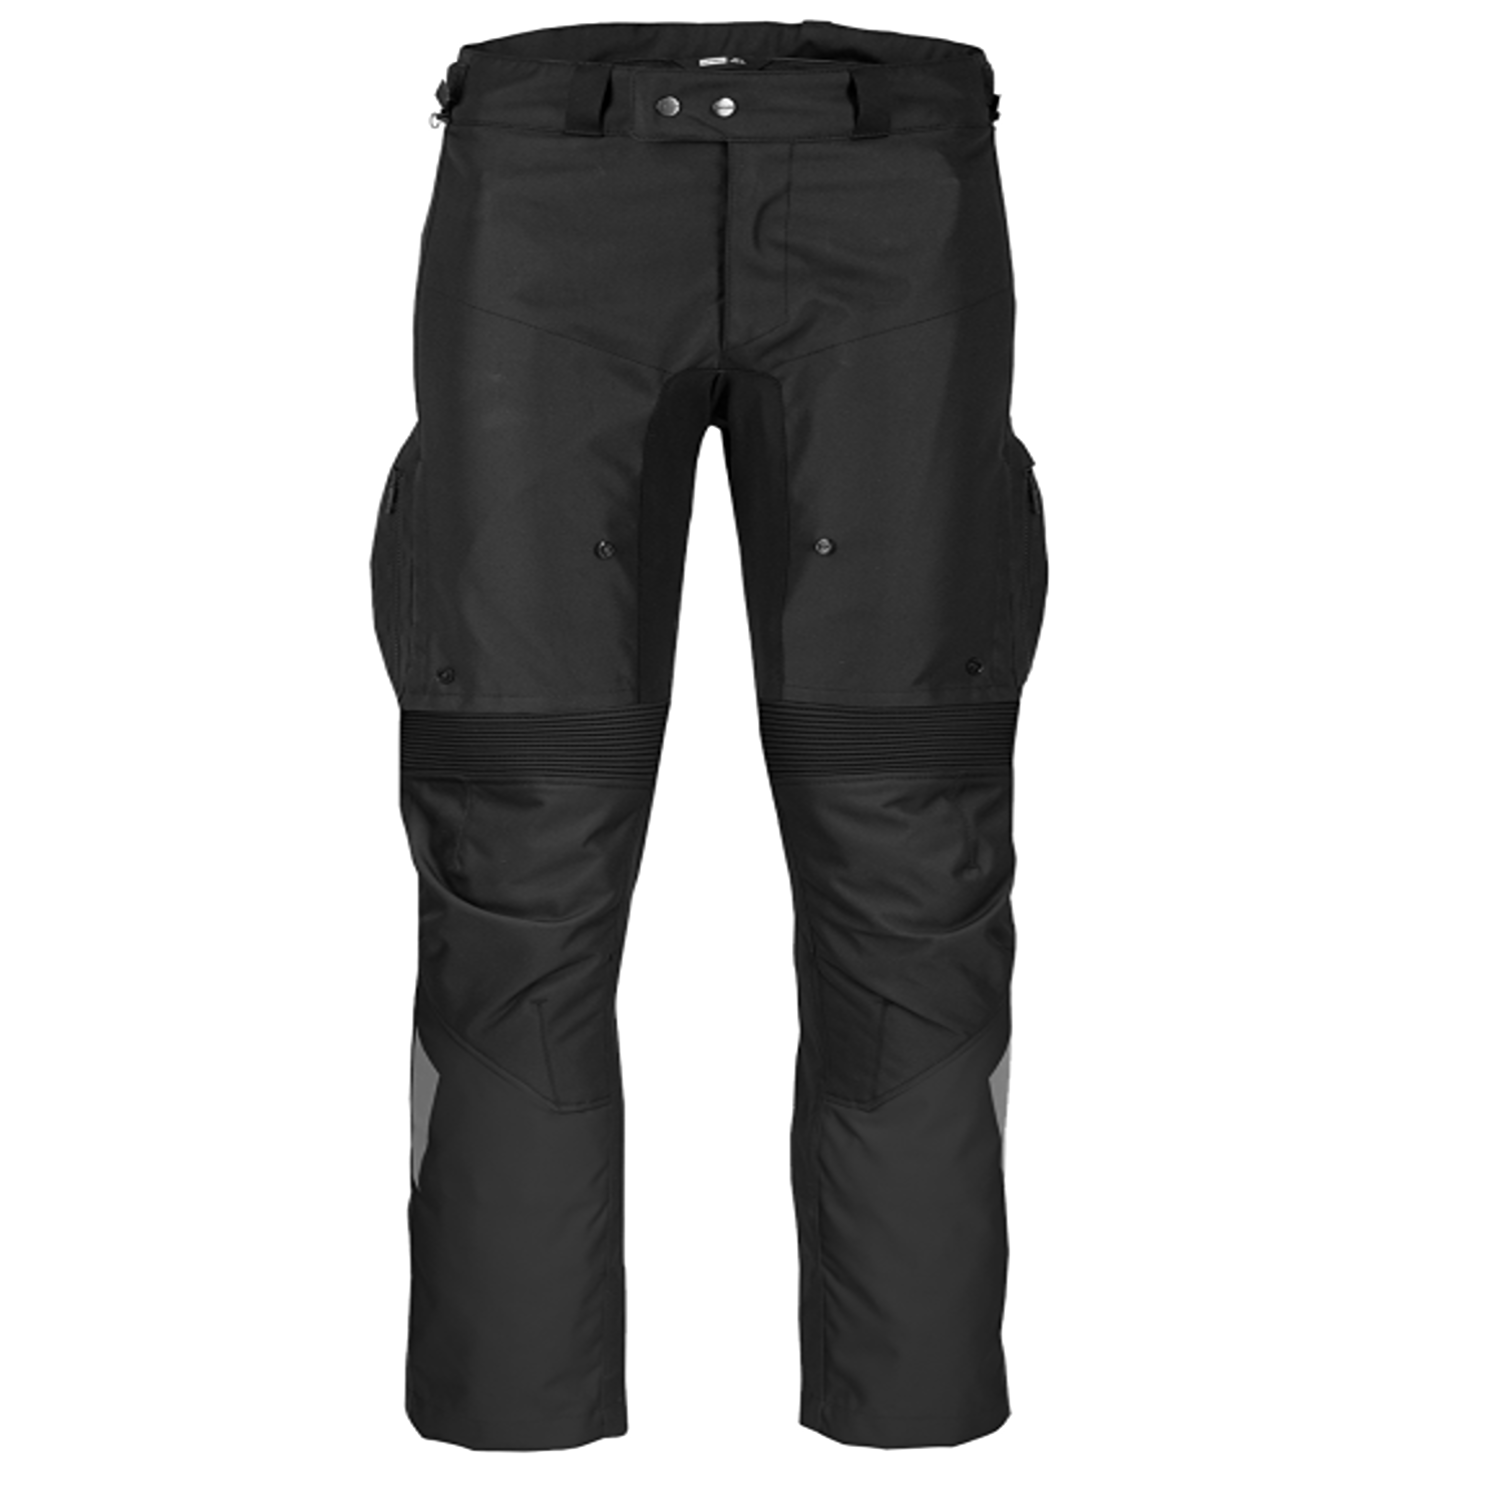 Image of EU Spidi Crossmaster Short Pants Black Taille 2XL